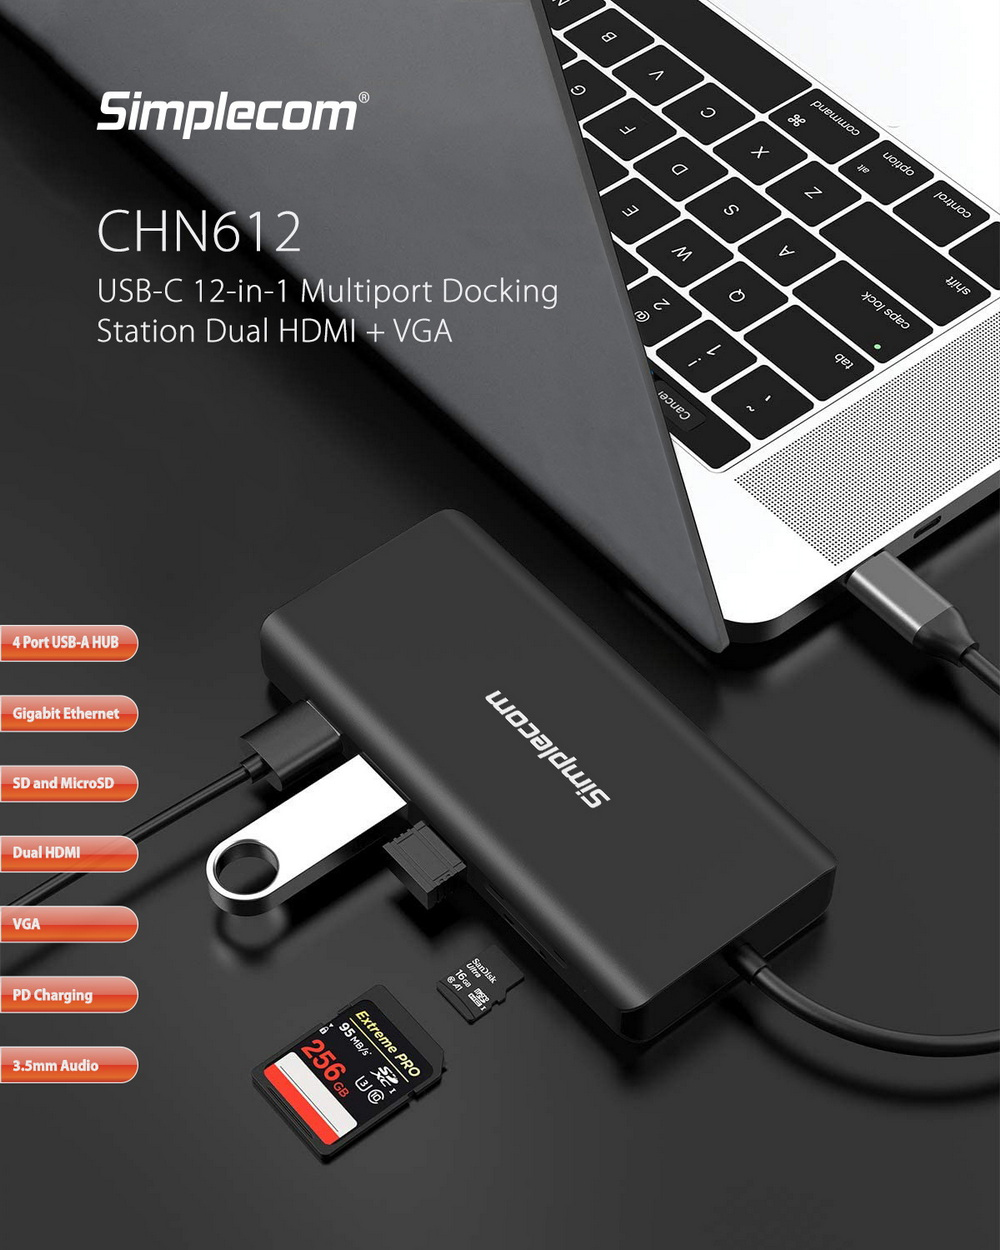 Laptop-Accessories-Simplecom-CHN612-USB-C-12-in-1-Multiport-Docking-Station-2xHDMI-VGA-Triple-Display-Gigabit-LAN-2